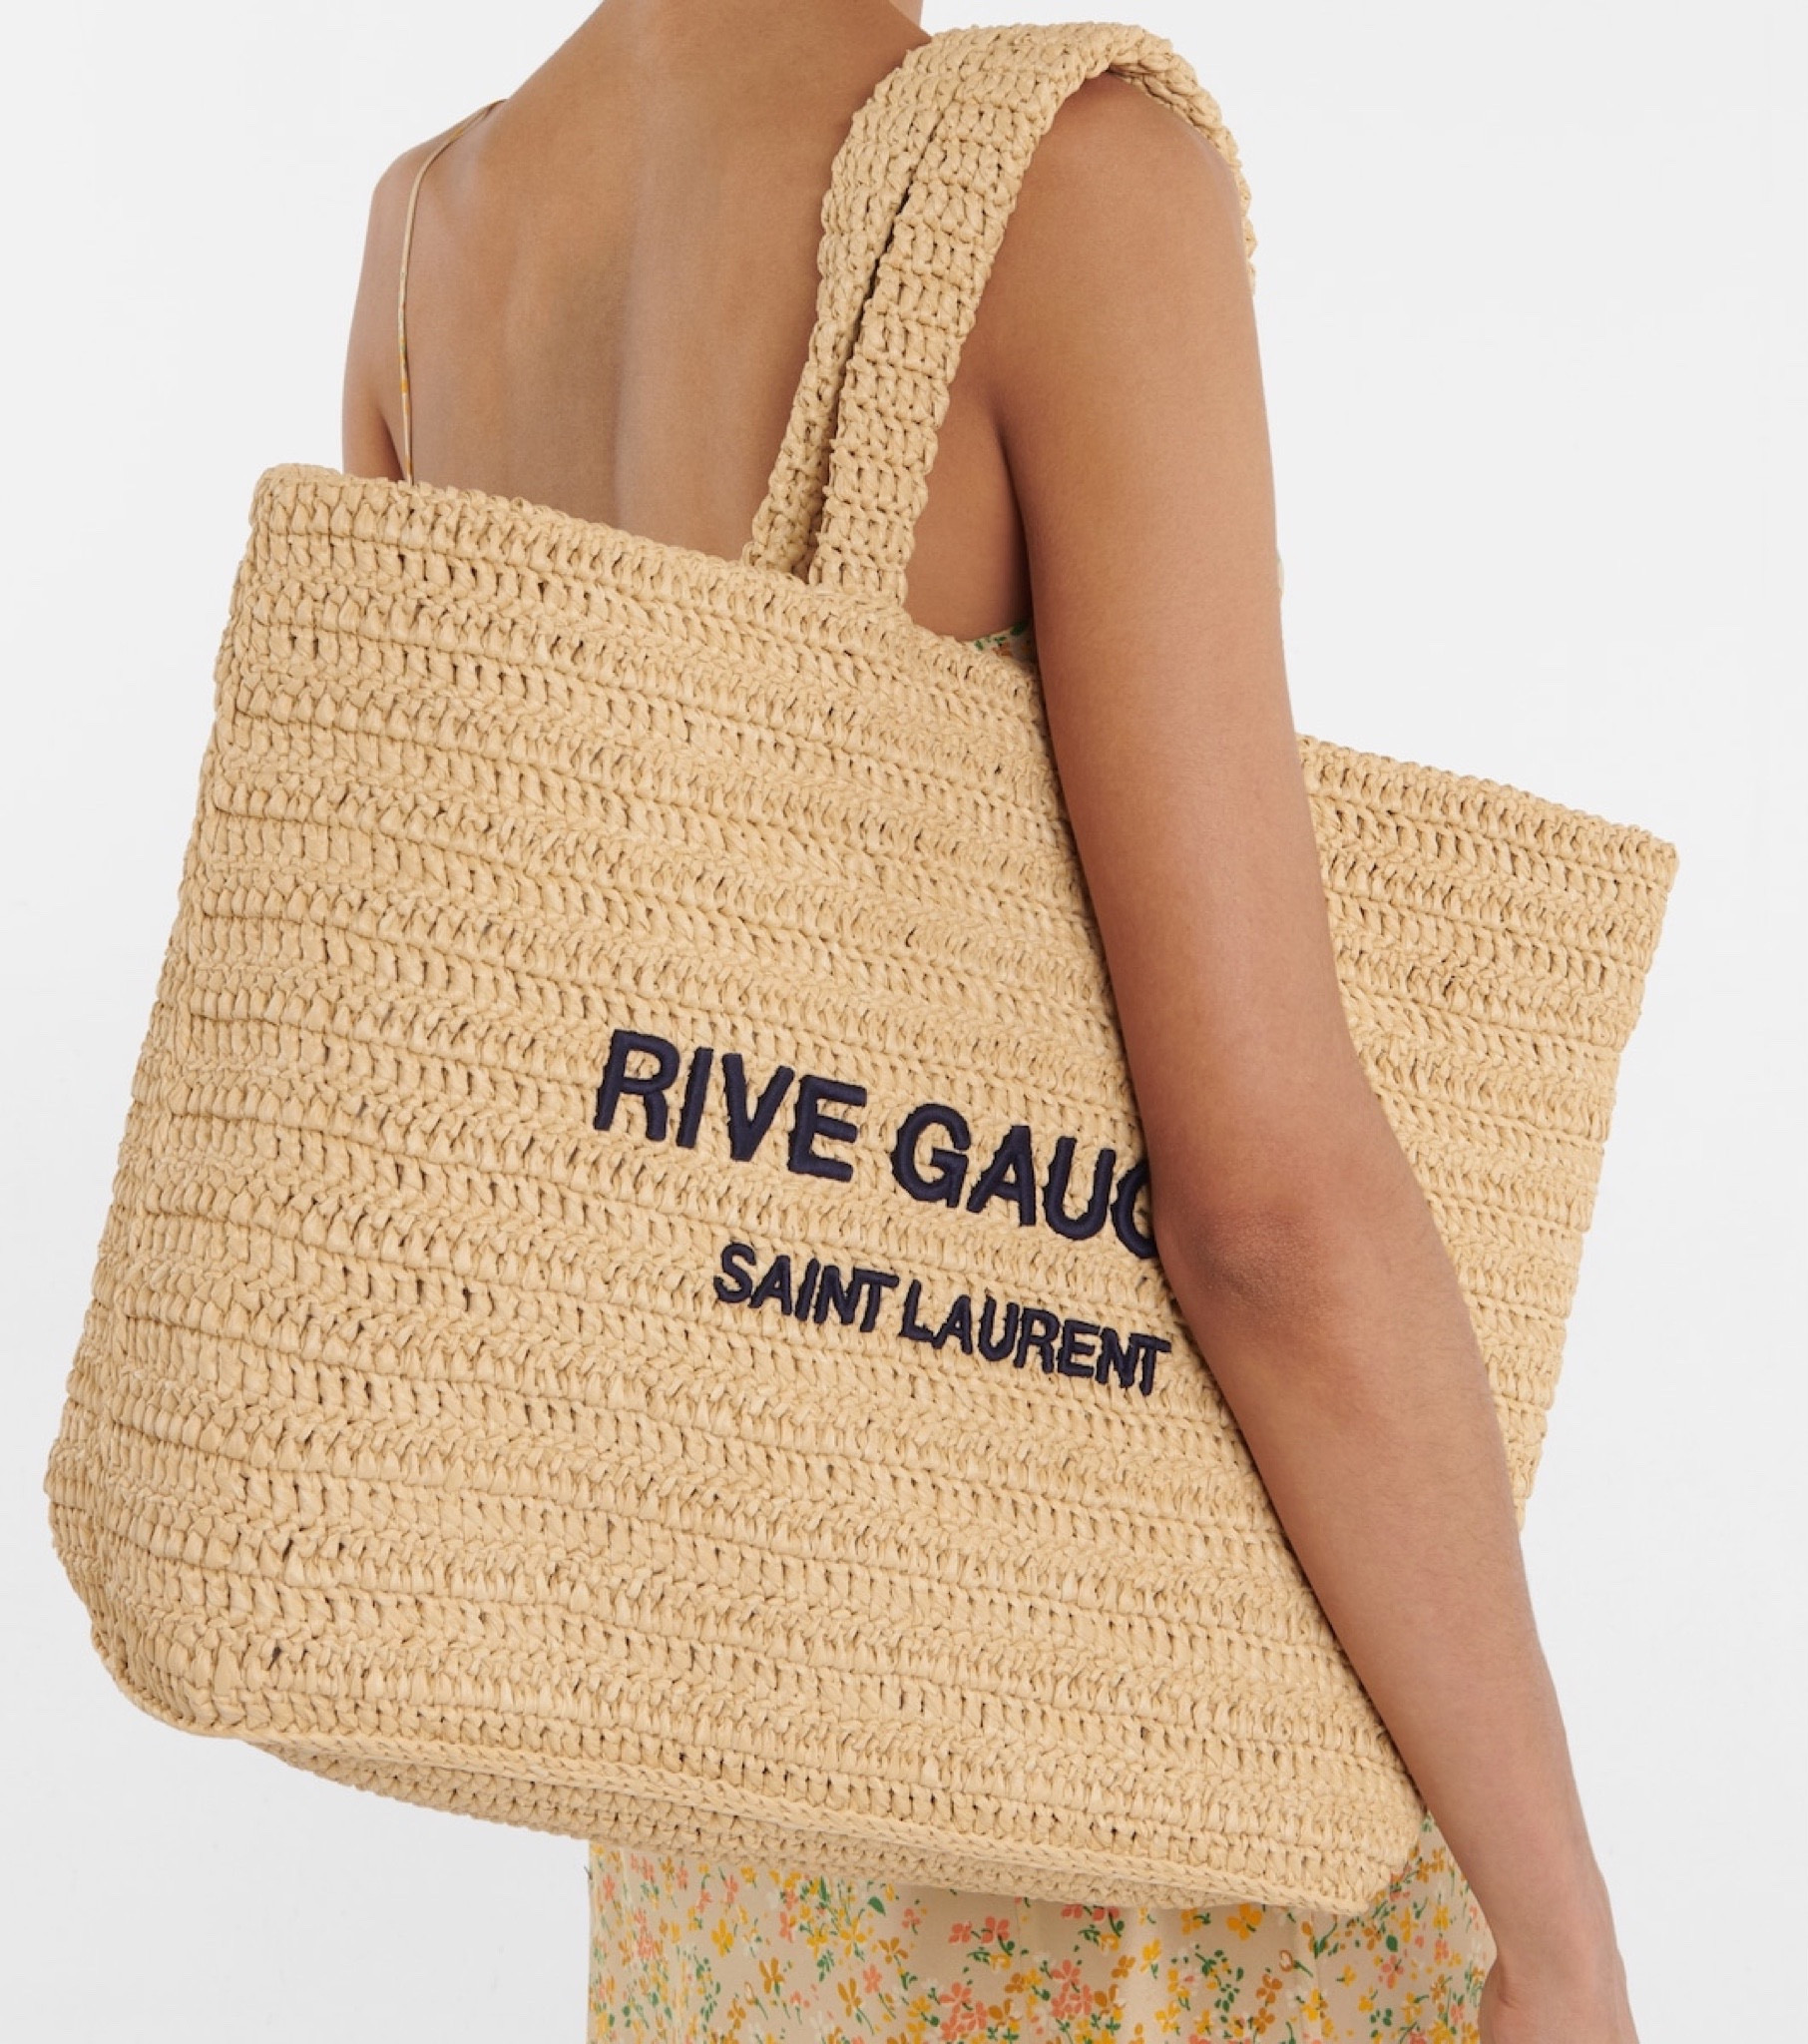 YSL Saint Laurent Sunset Bag Review 2023  Classic Forever Bag?  #saintlaurent #ysl 